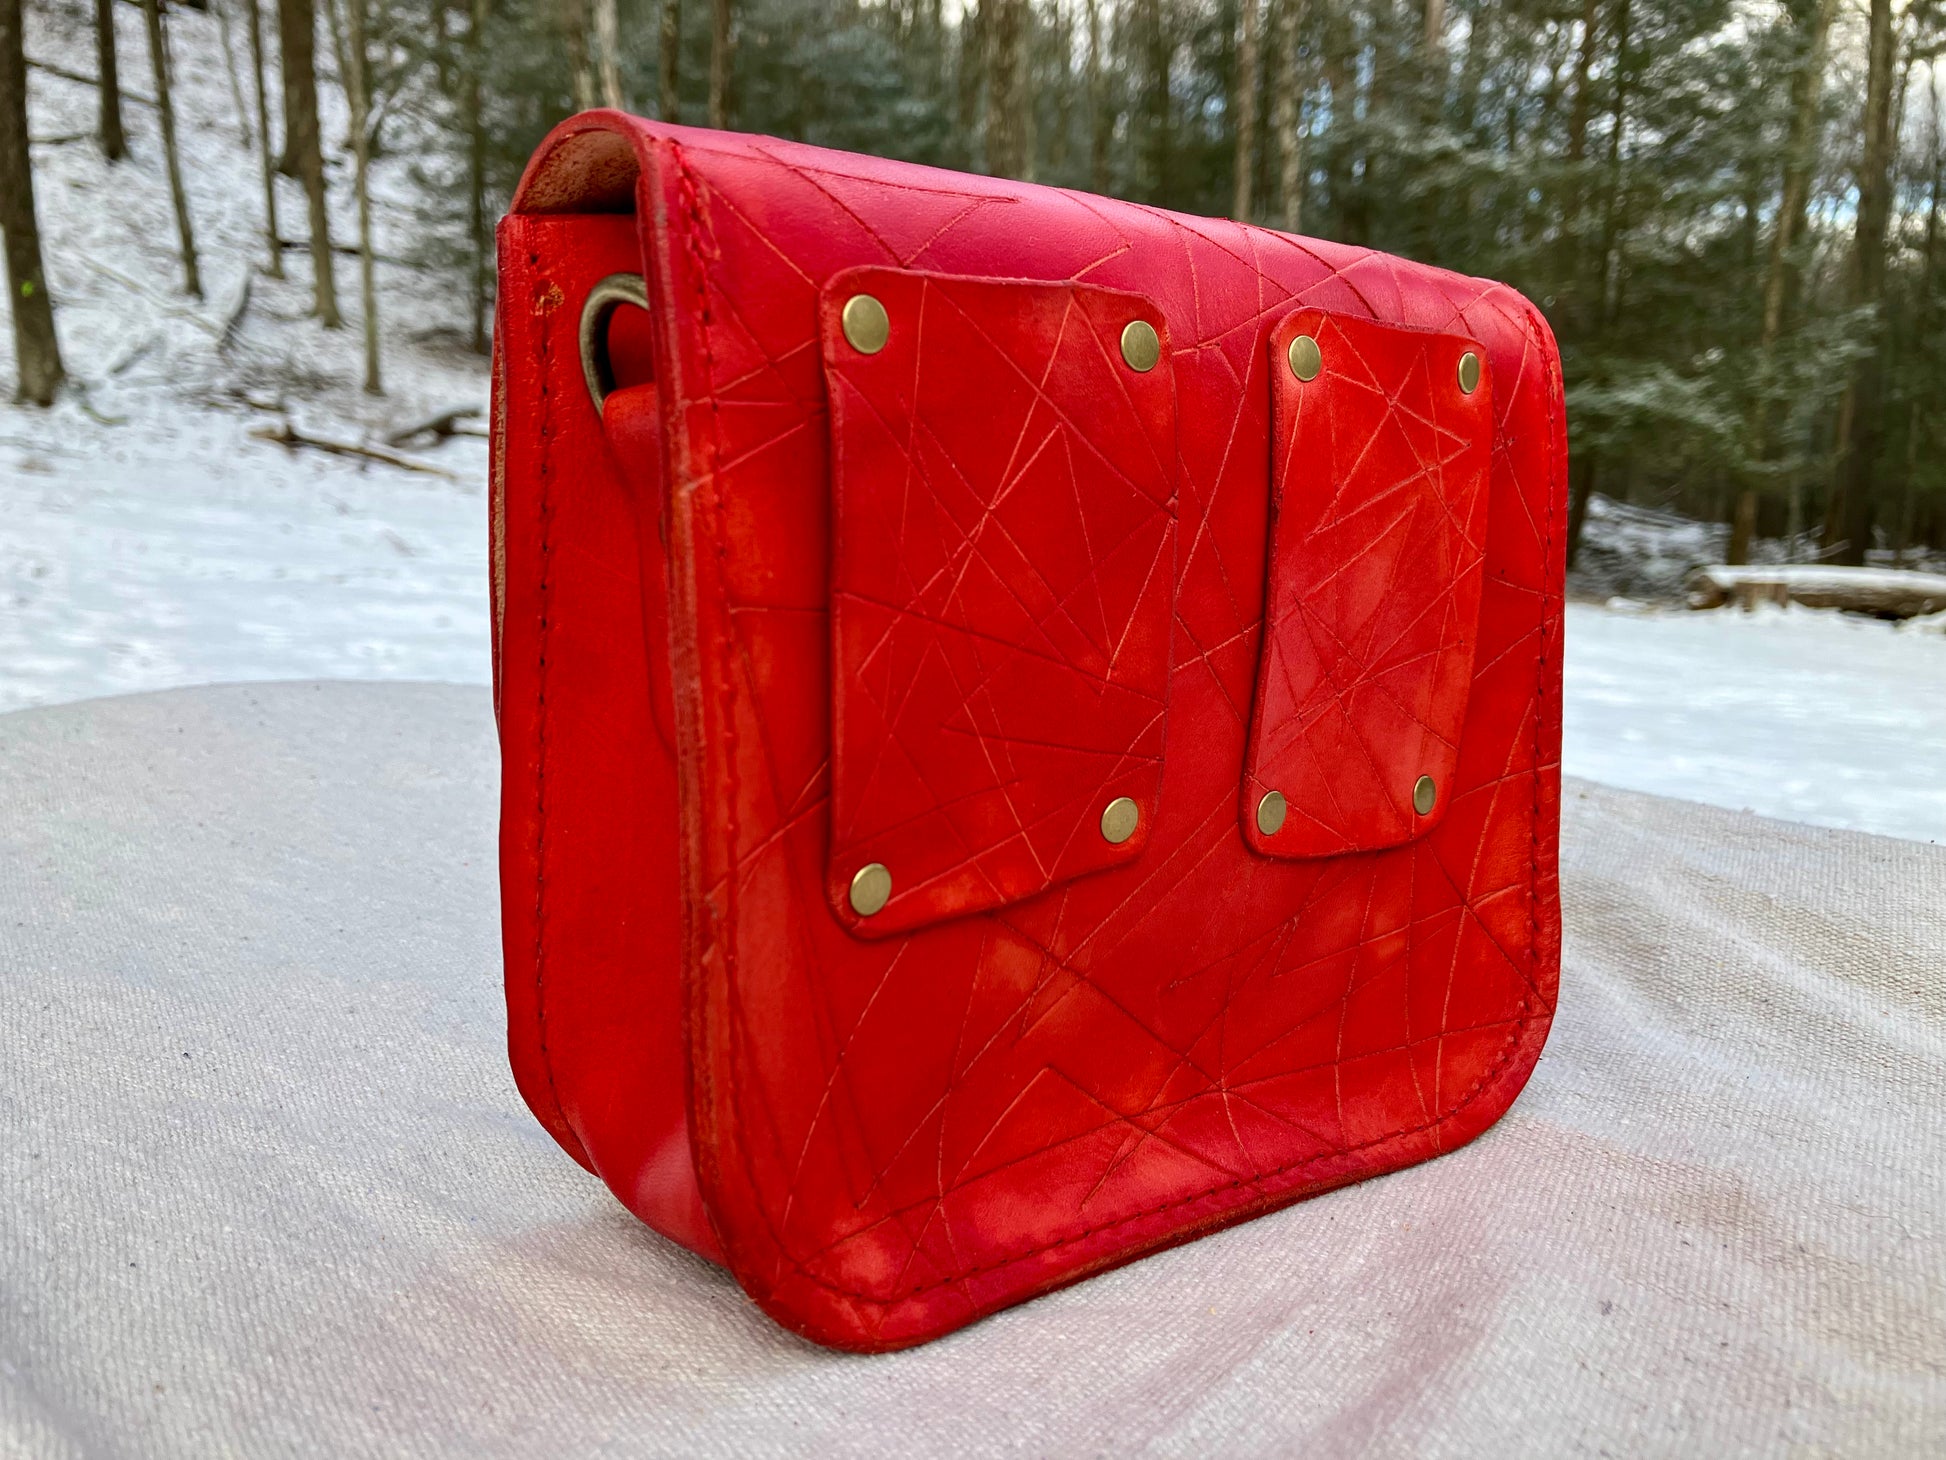 red slash embosssed handmade leather bag/belt-bag hybrid with crossbody strap by Wilder Leather.